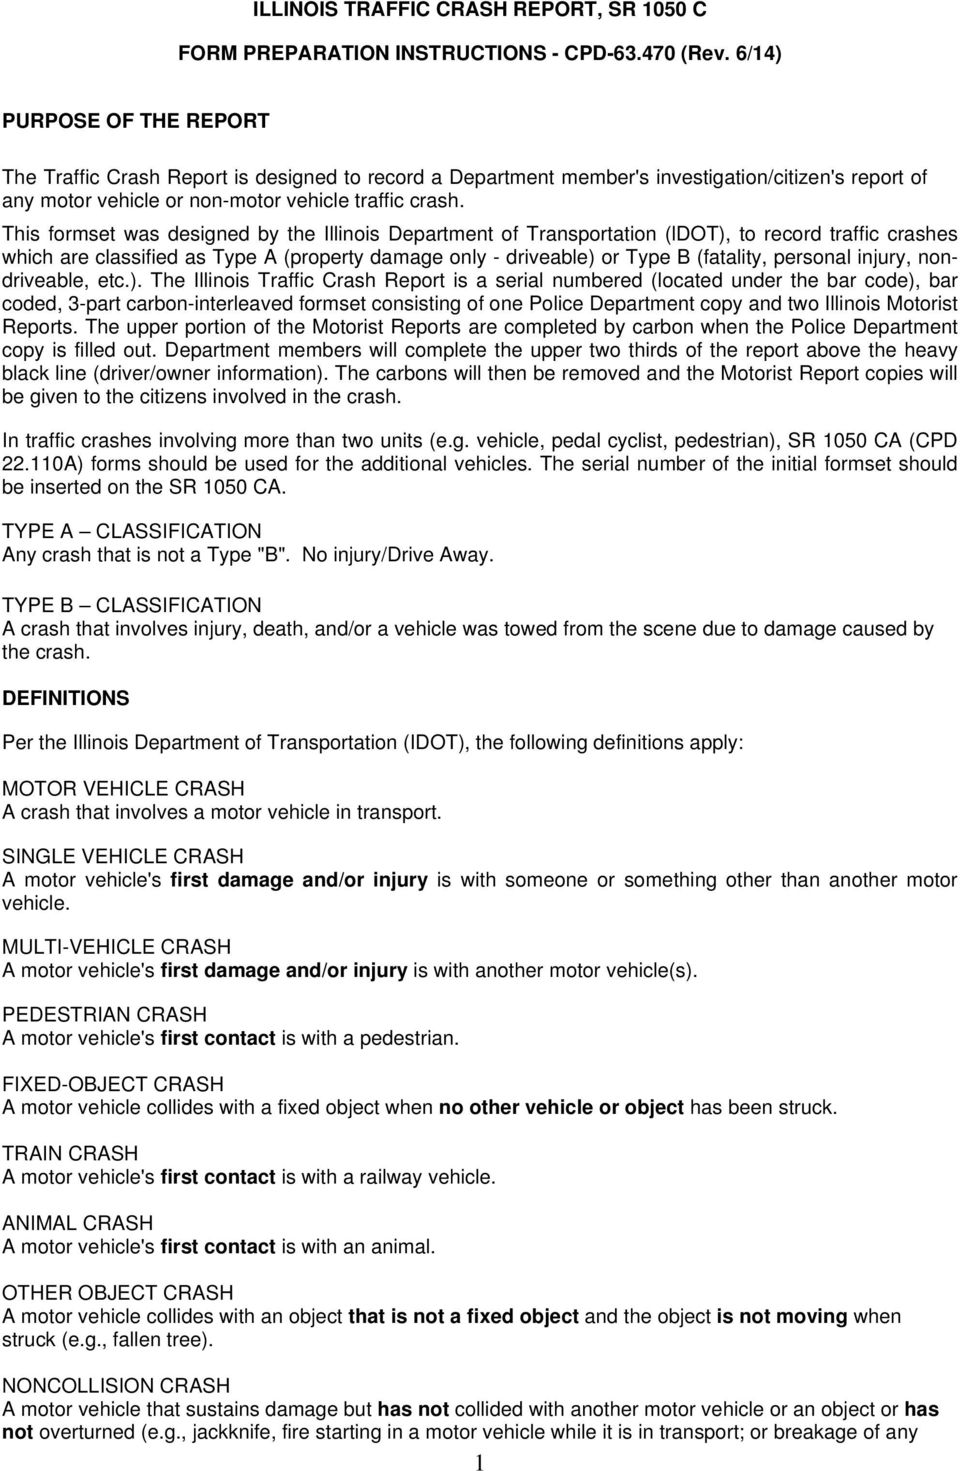 Illinois Traffic Crash Report Sr 1050 C Form Preparation Instructions Cpd Rev 6 14 Pdf Free Download